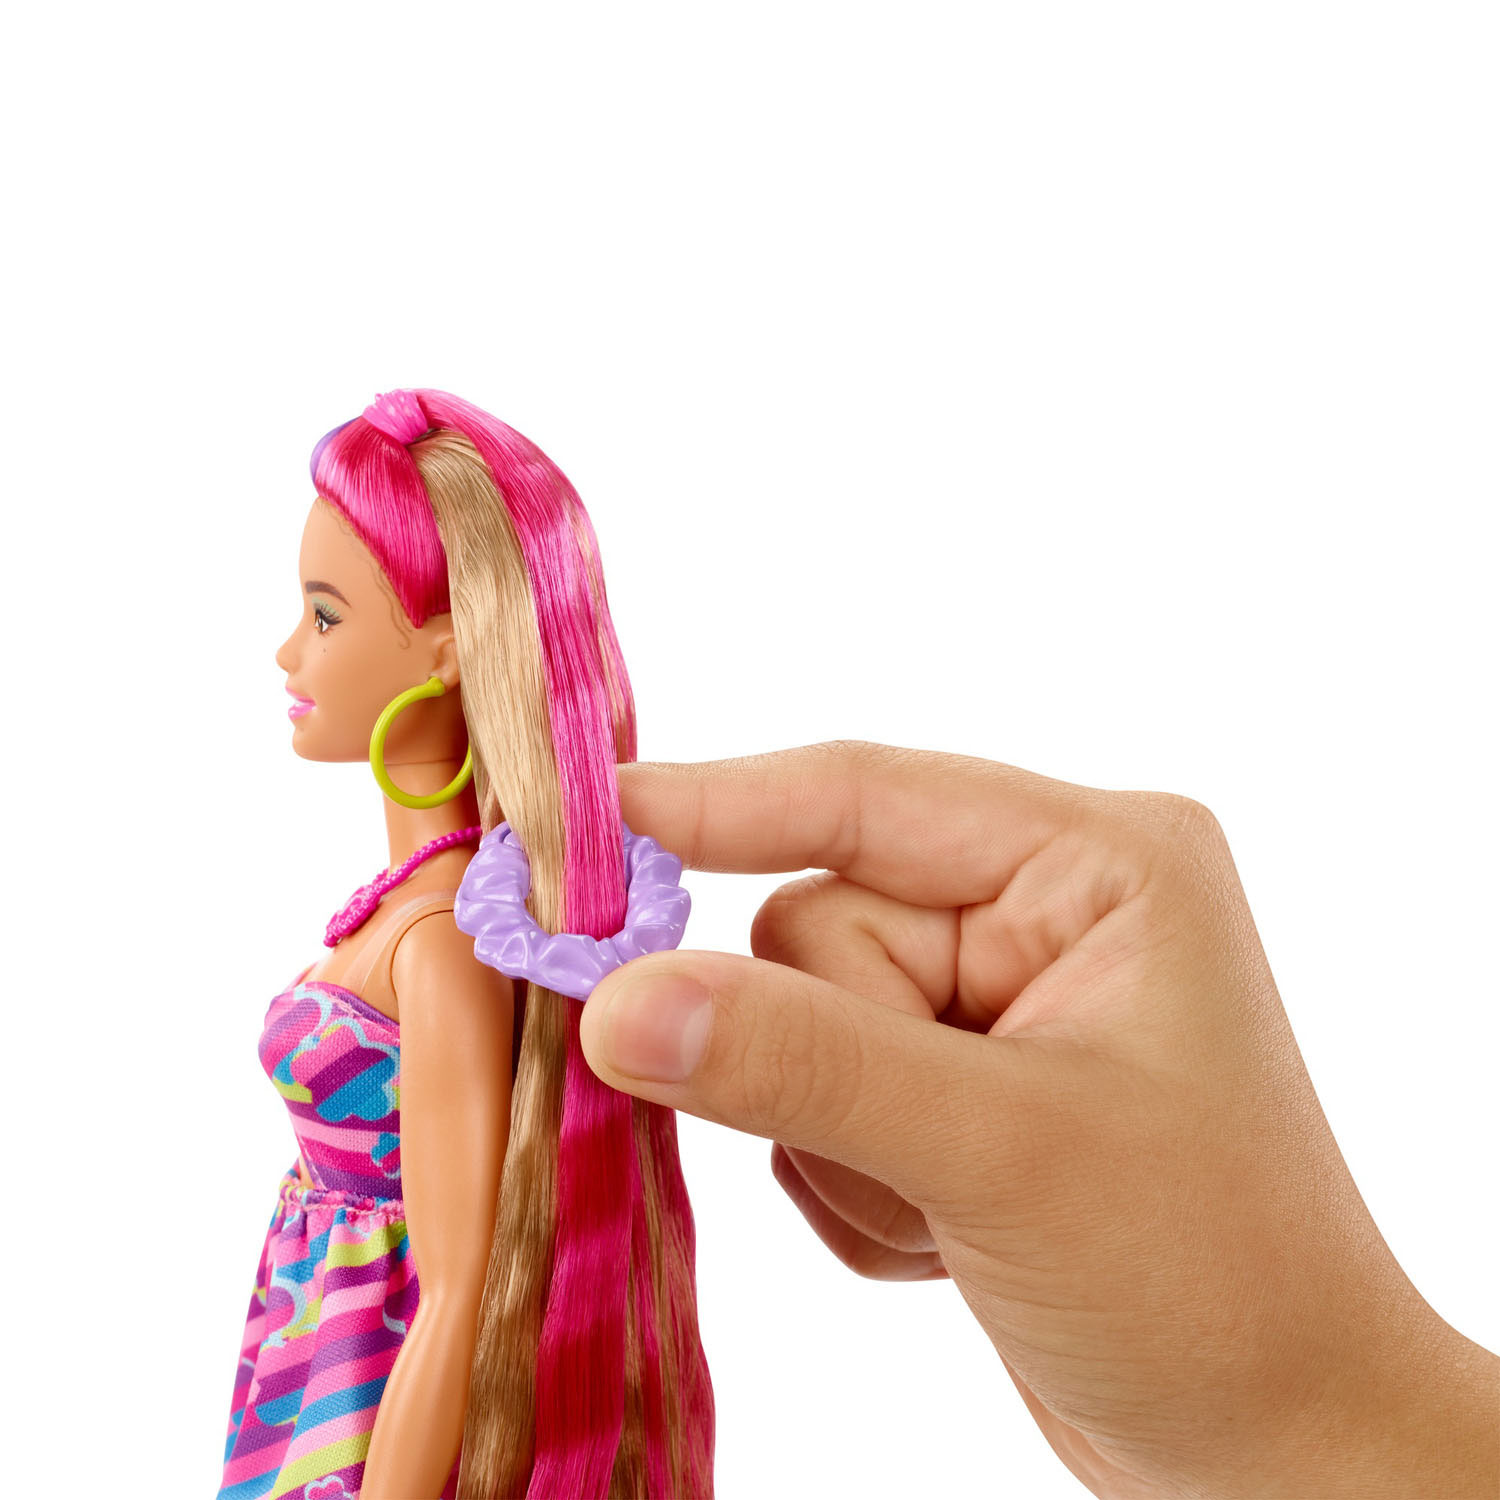 Barbie Totally Hair Pop 2 - Flower